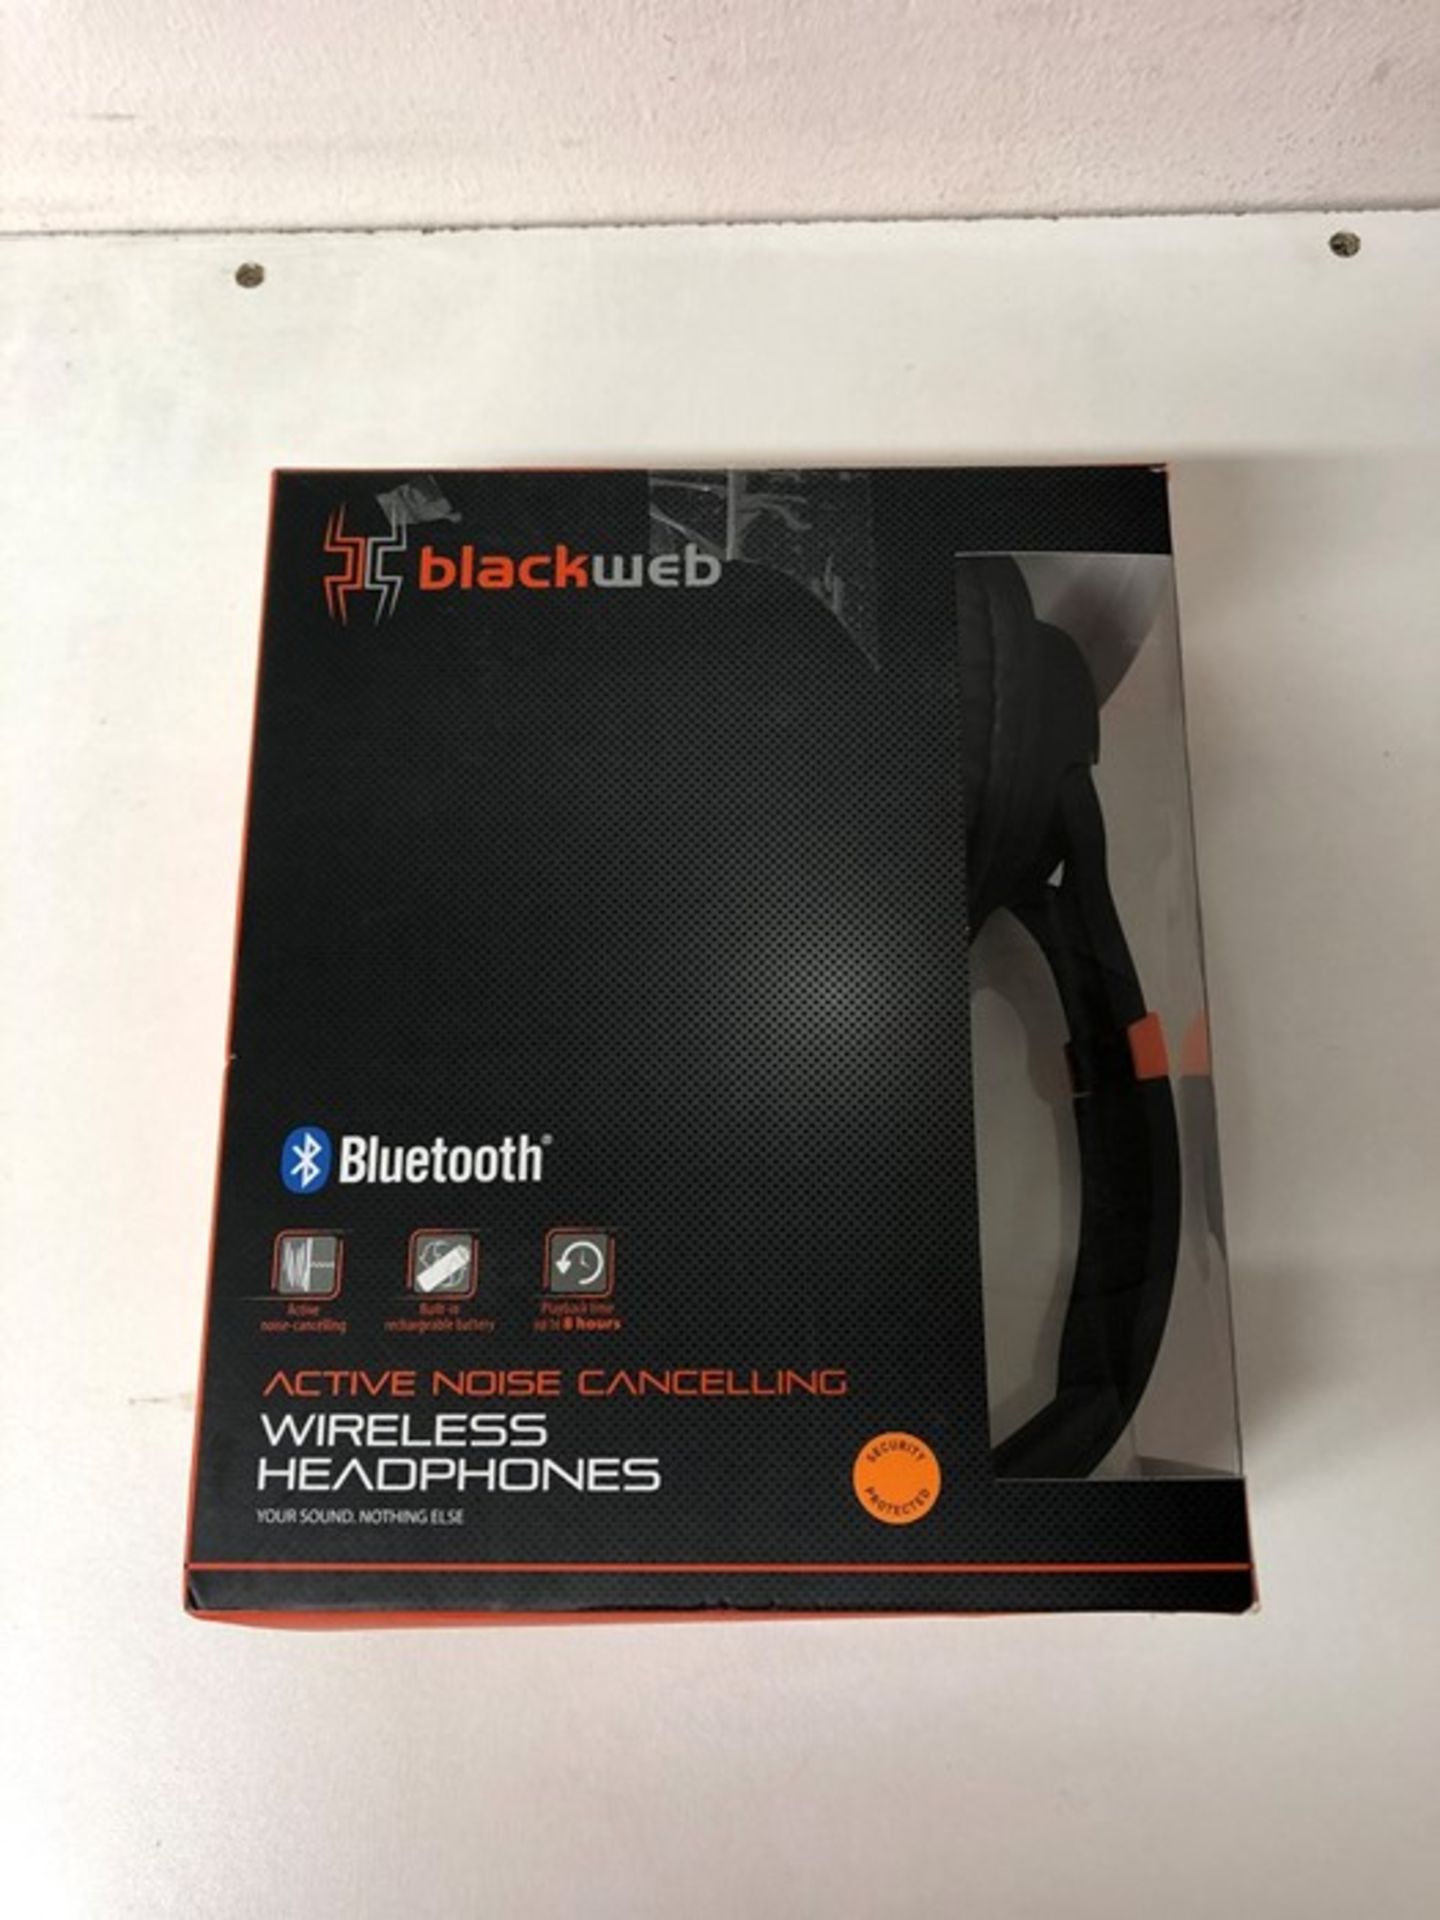 1 BOXED BLACK WEB BLUETOOTH WIRELESS HEADPHONES IN ORANGE AND BLACK / RRP £20.00 - BL 3809 (